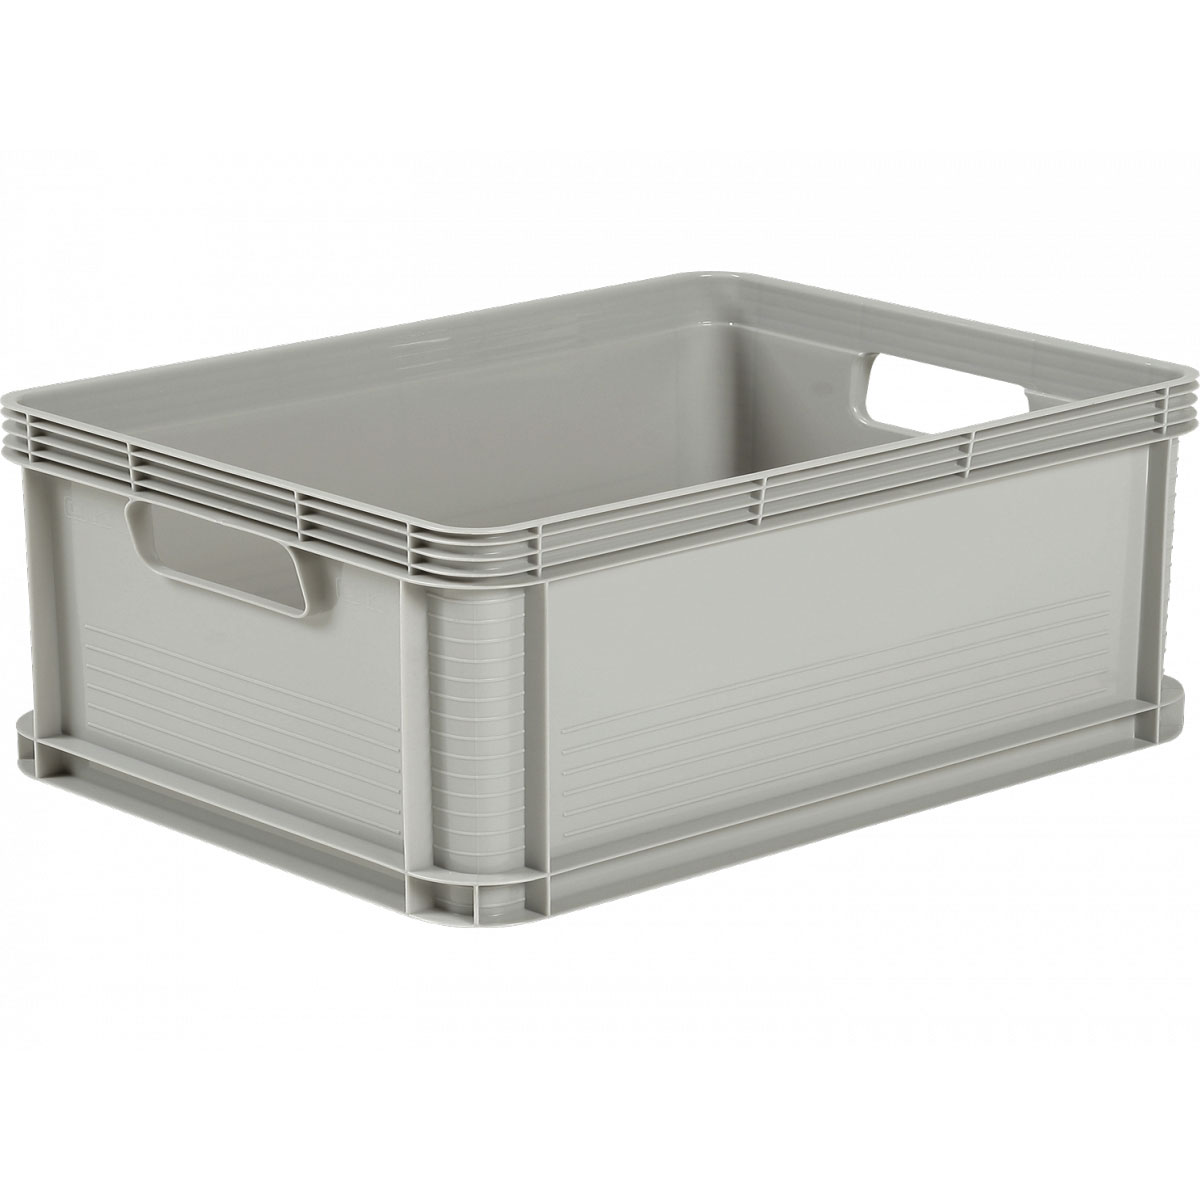 2 x Robusto-Box Basket 22 L grau Aufbewahrungsbox Box Kiste 